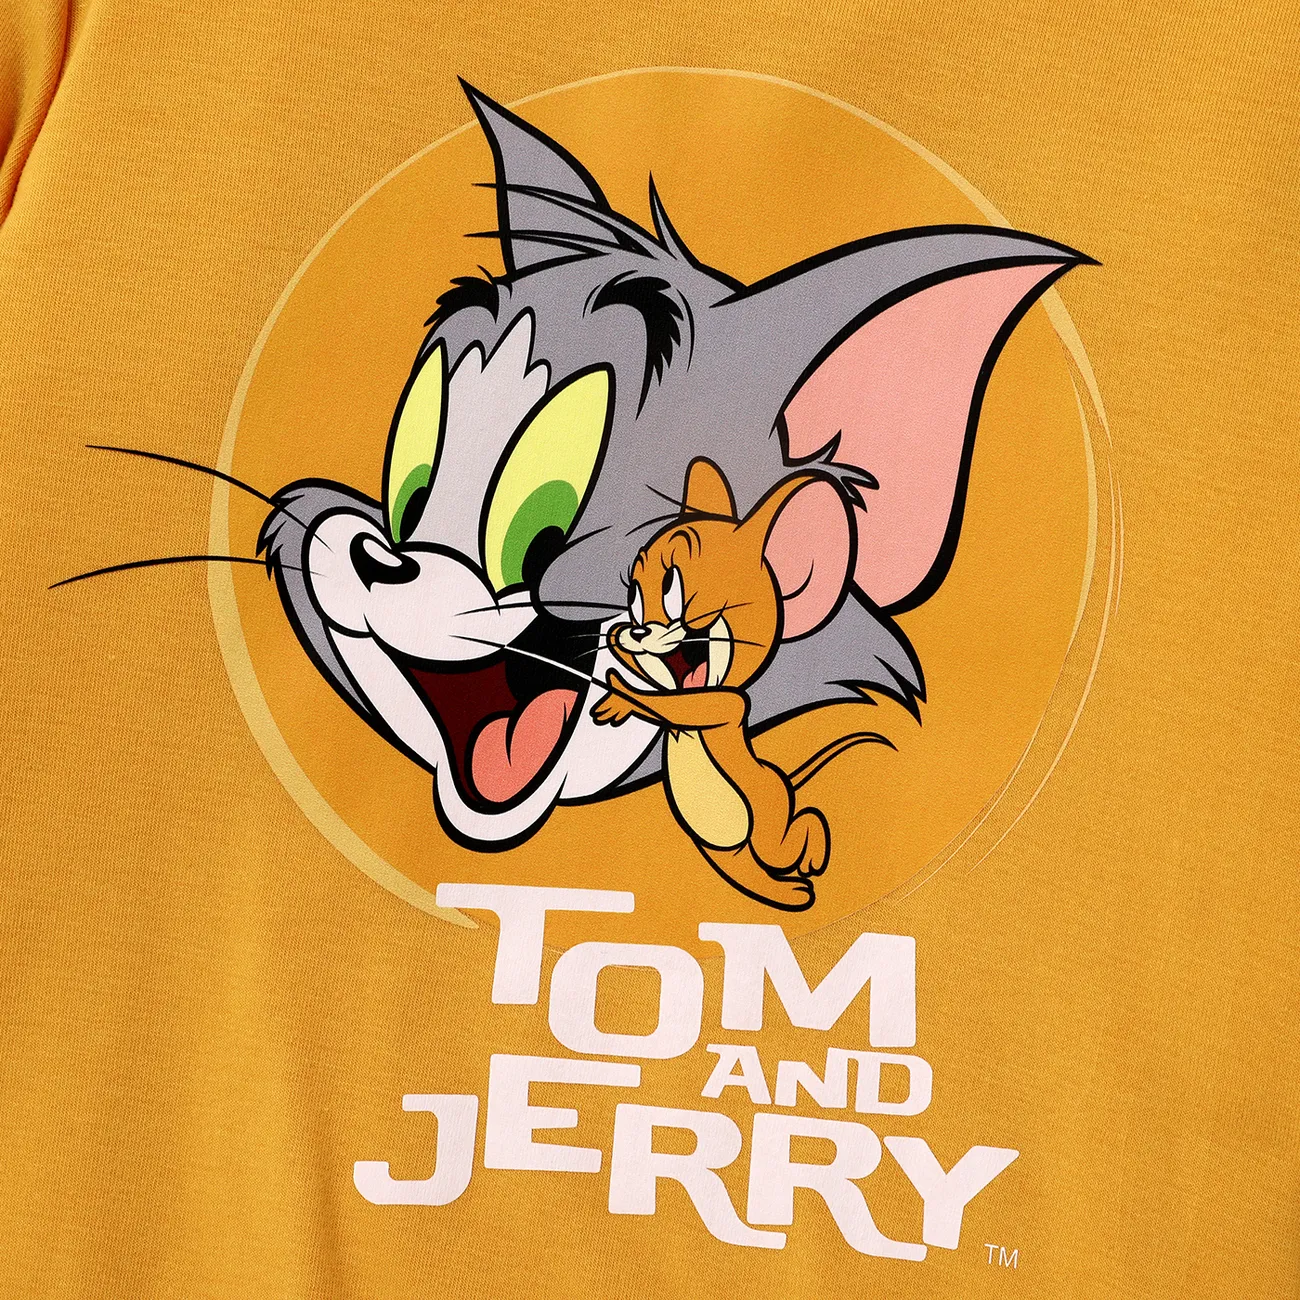 Tom and Jerry هوديس 2 - 6 سنوات رجالي بغطاء للرأس نقش حيوانات الأصفر big image 1